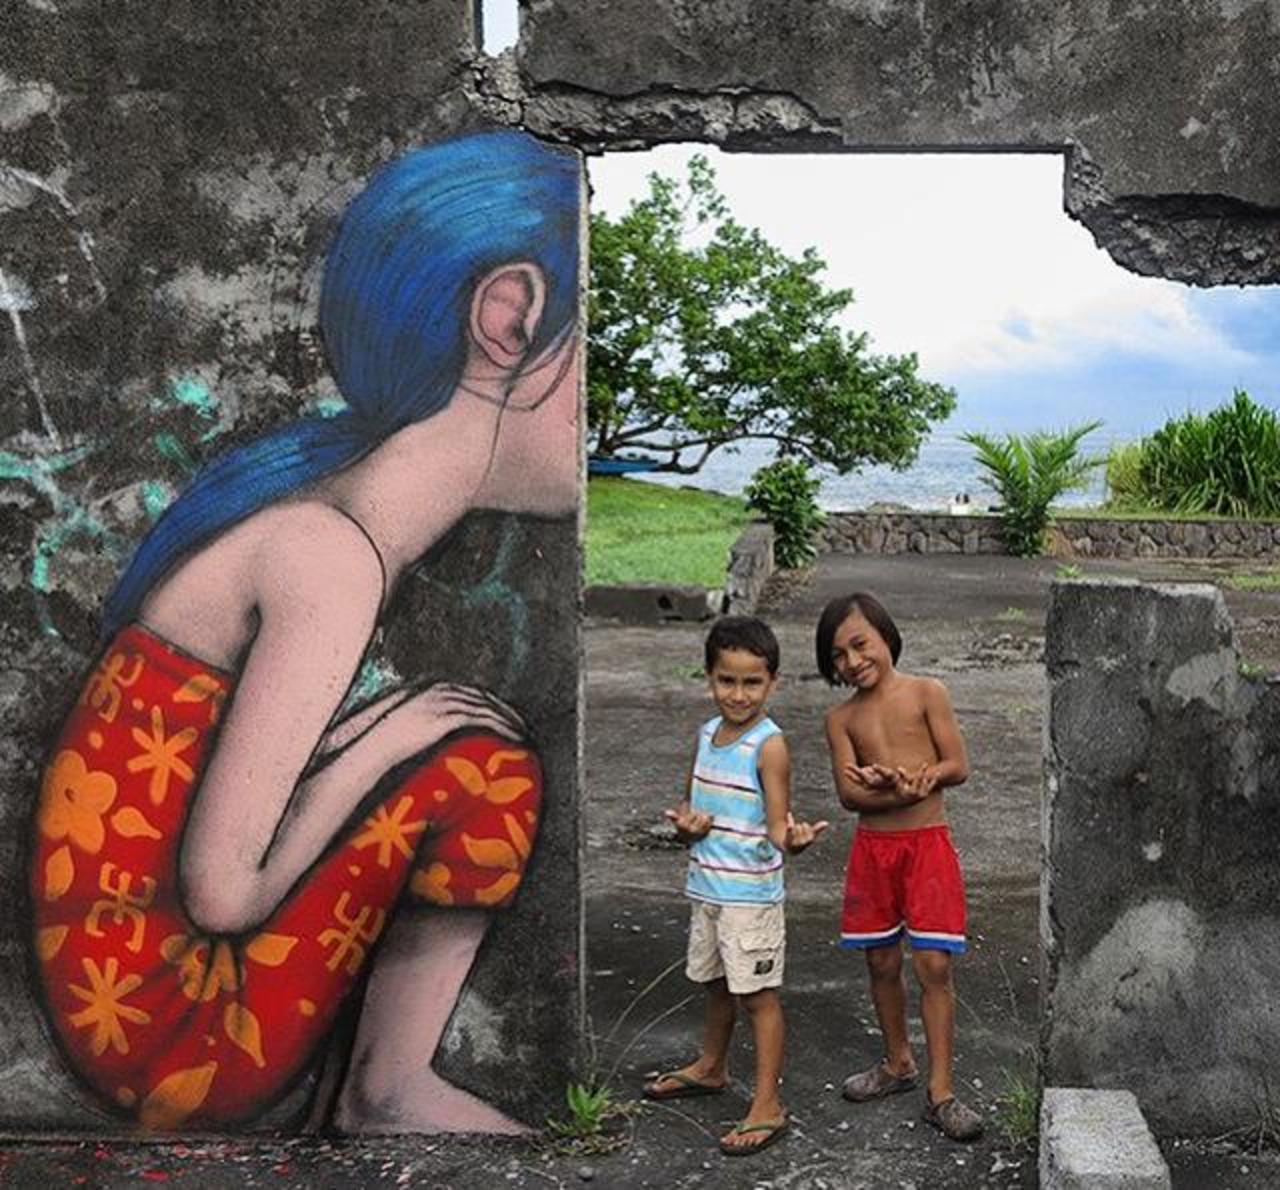 Street Art wall by Seth Globepainter in Mataiea, Tahiti 

#art #arte #graffiti #streetart http://t.co/TaJSGzpGsD